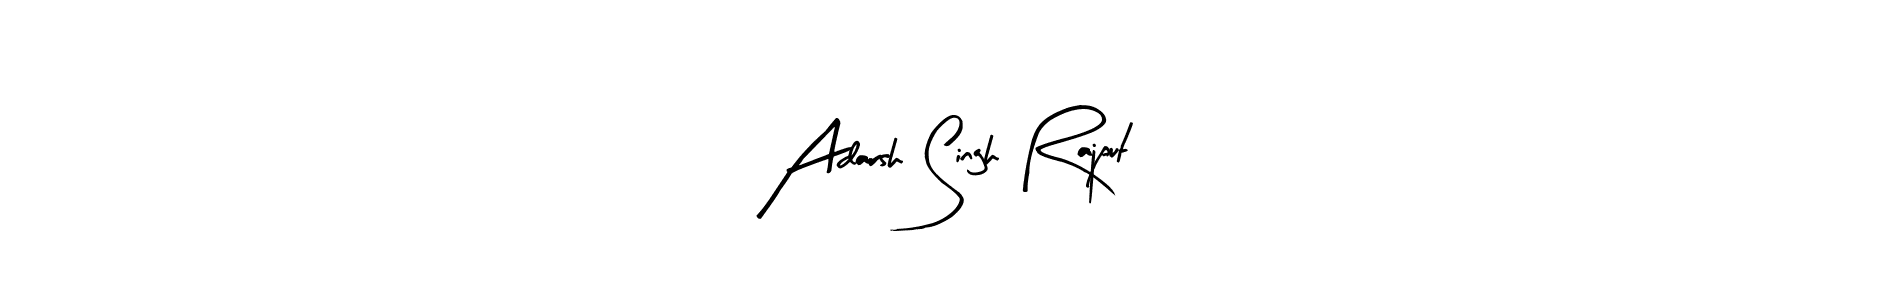 How to Draw Adarsh Singh Rajput signature style? Arty Signature is a latest design signature styles for name Adarsh Singh Rajput. Adarsh Singh Rajput signature style 8 images and pictures png